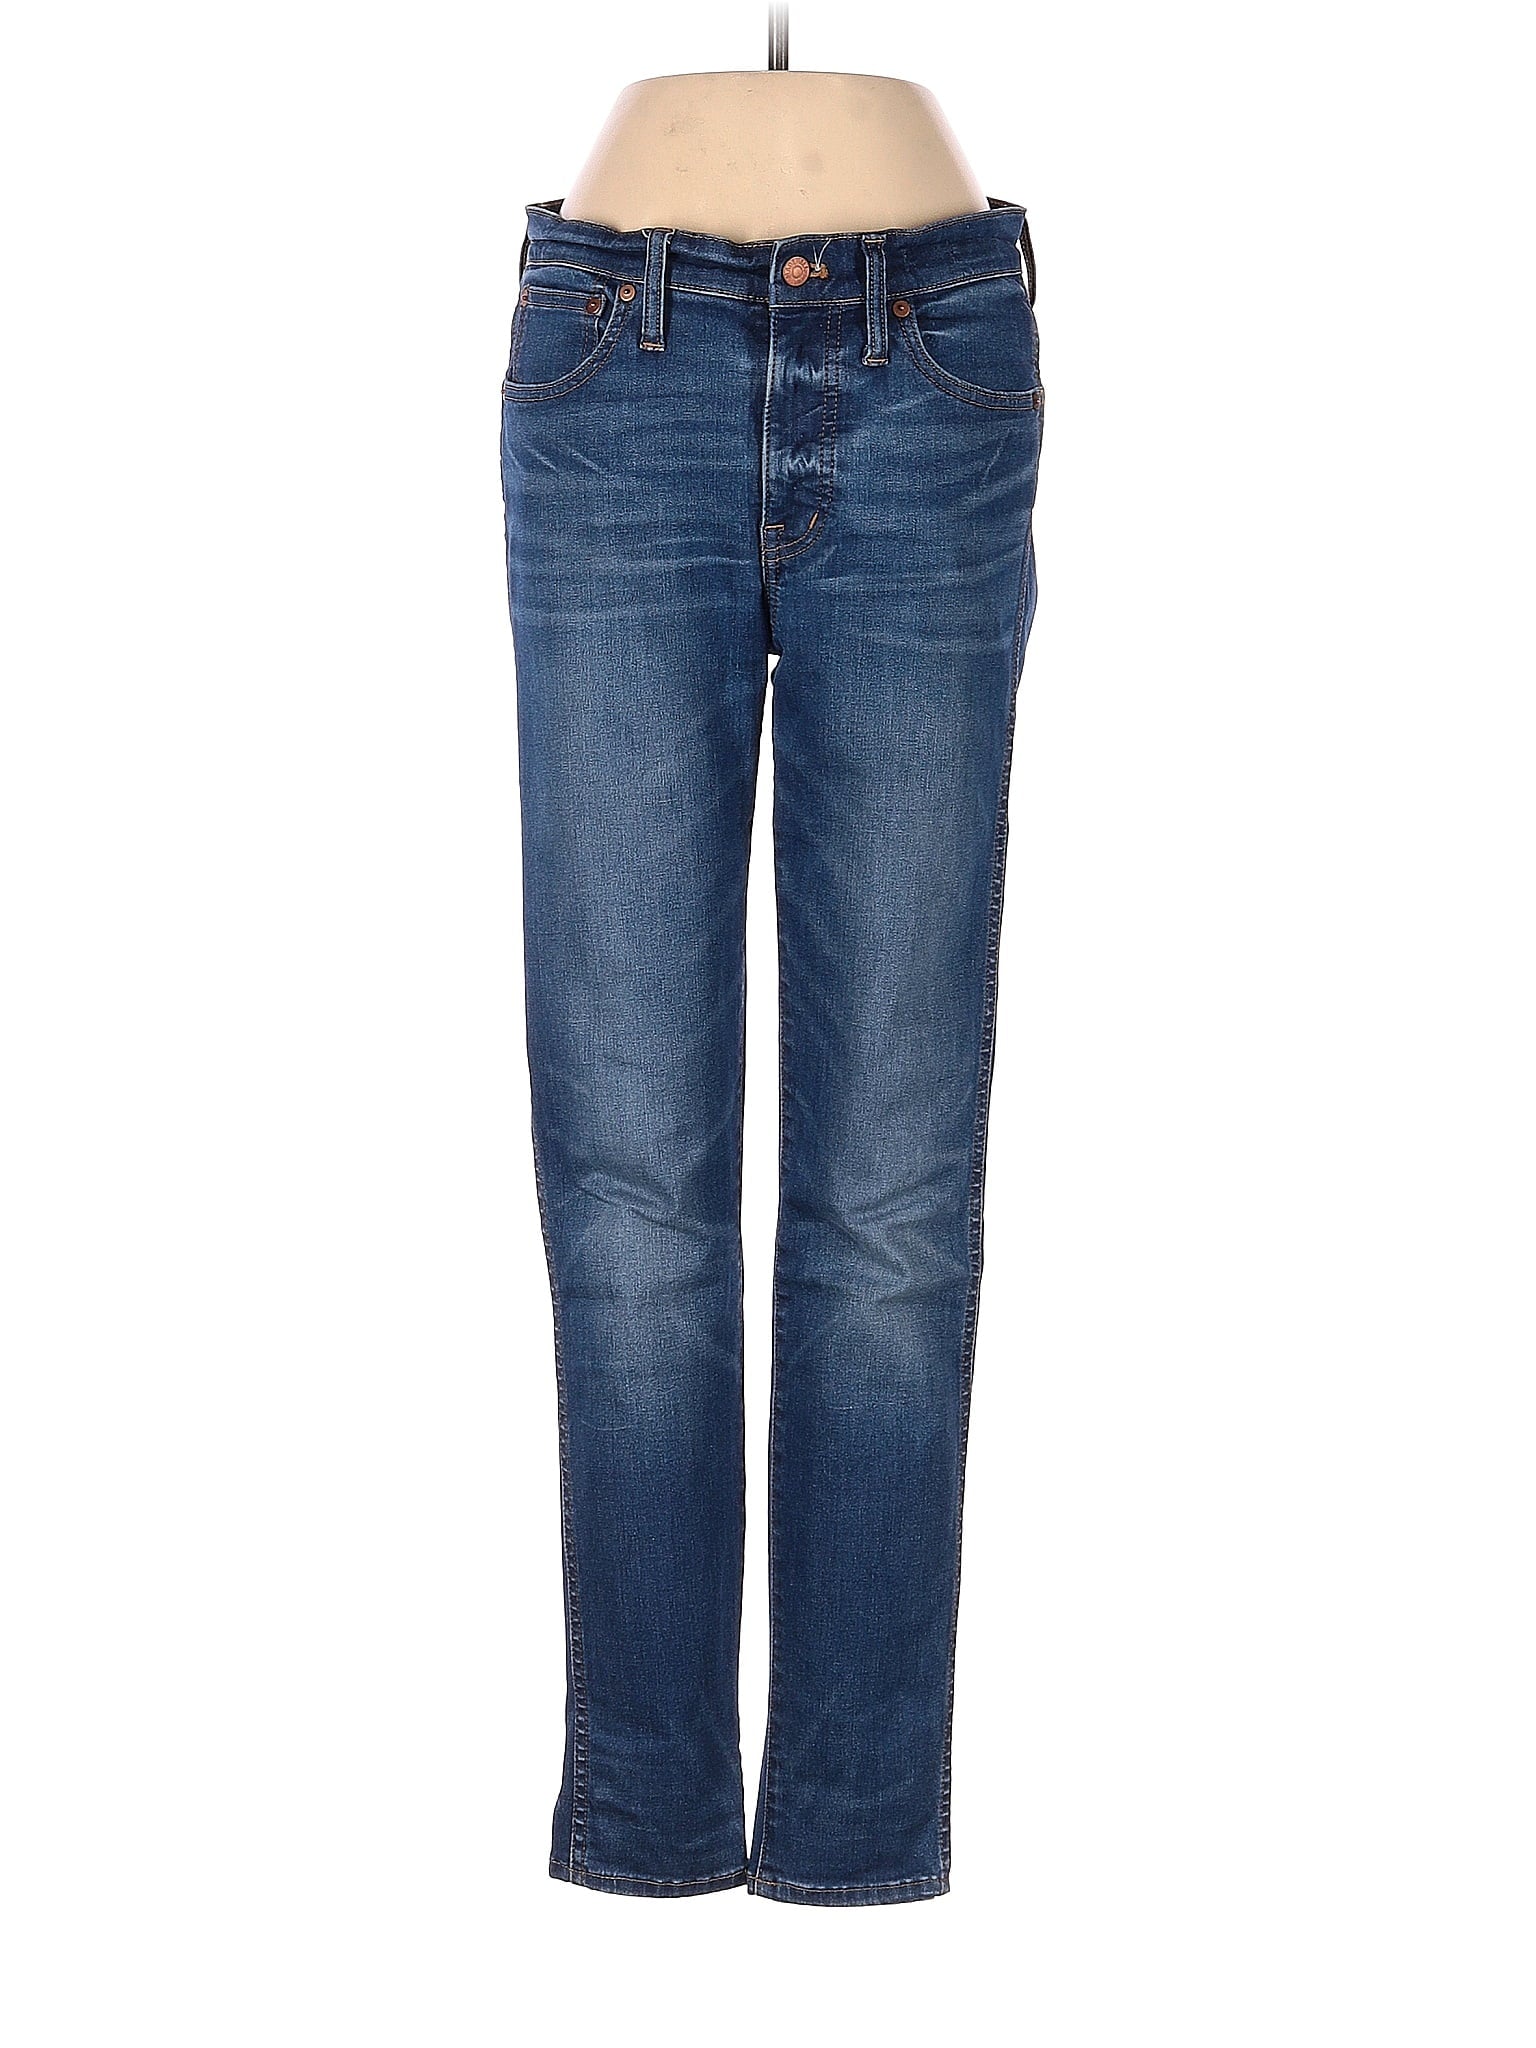 High-Rise Jeans waist size - 27